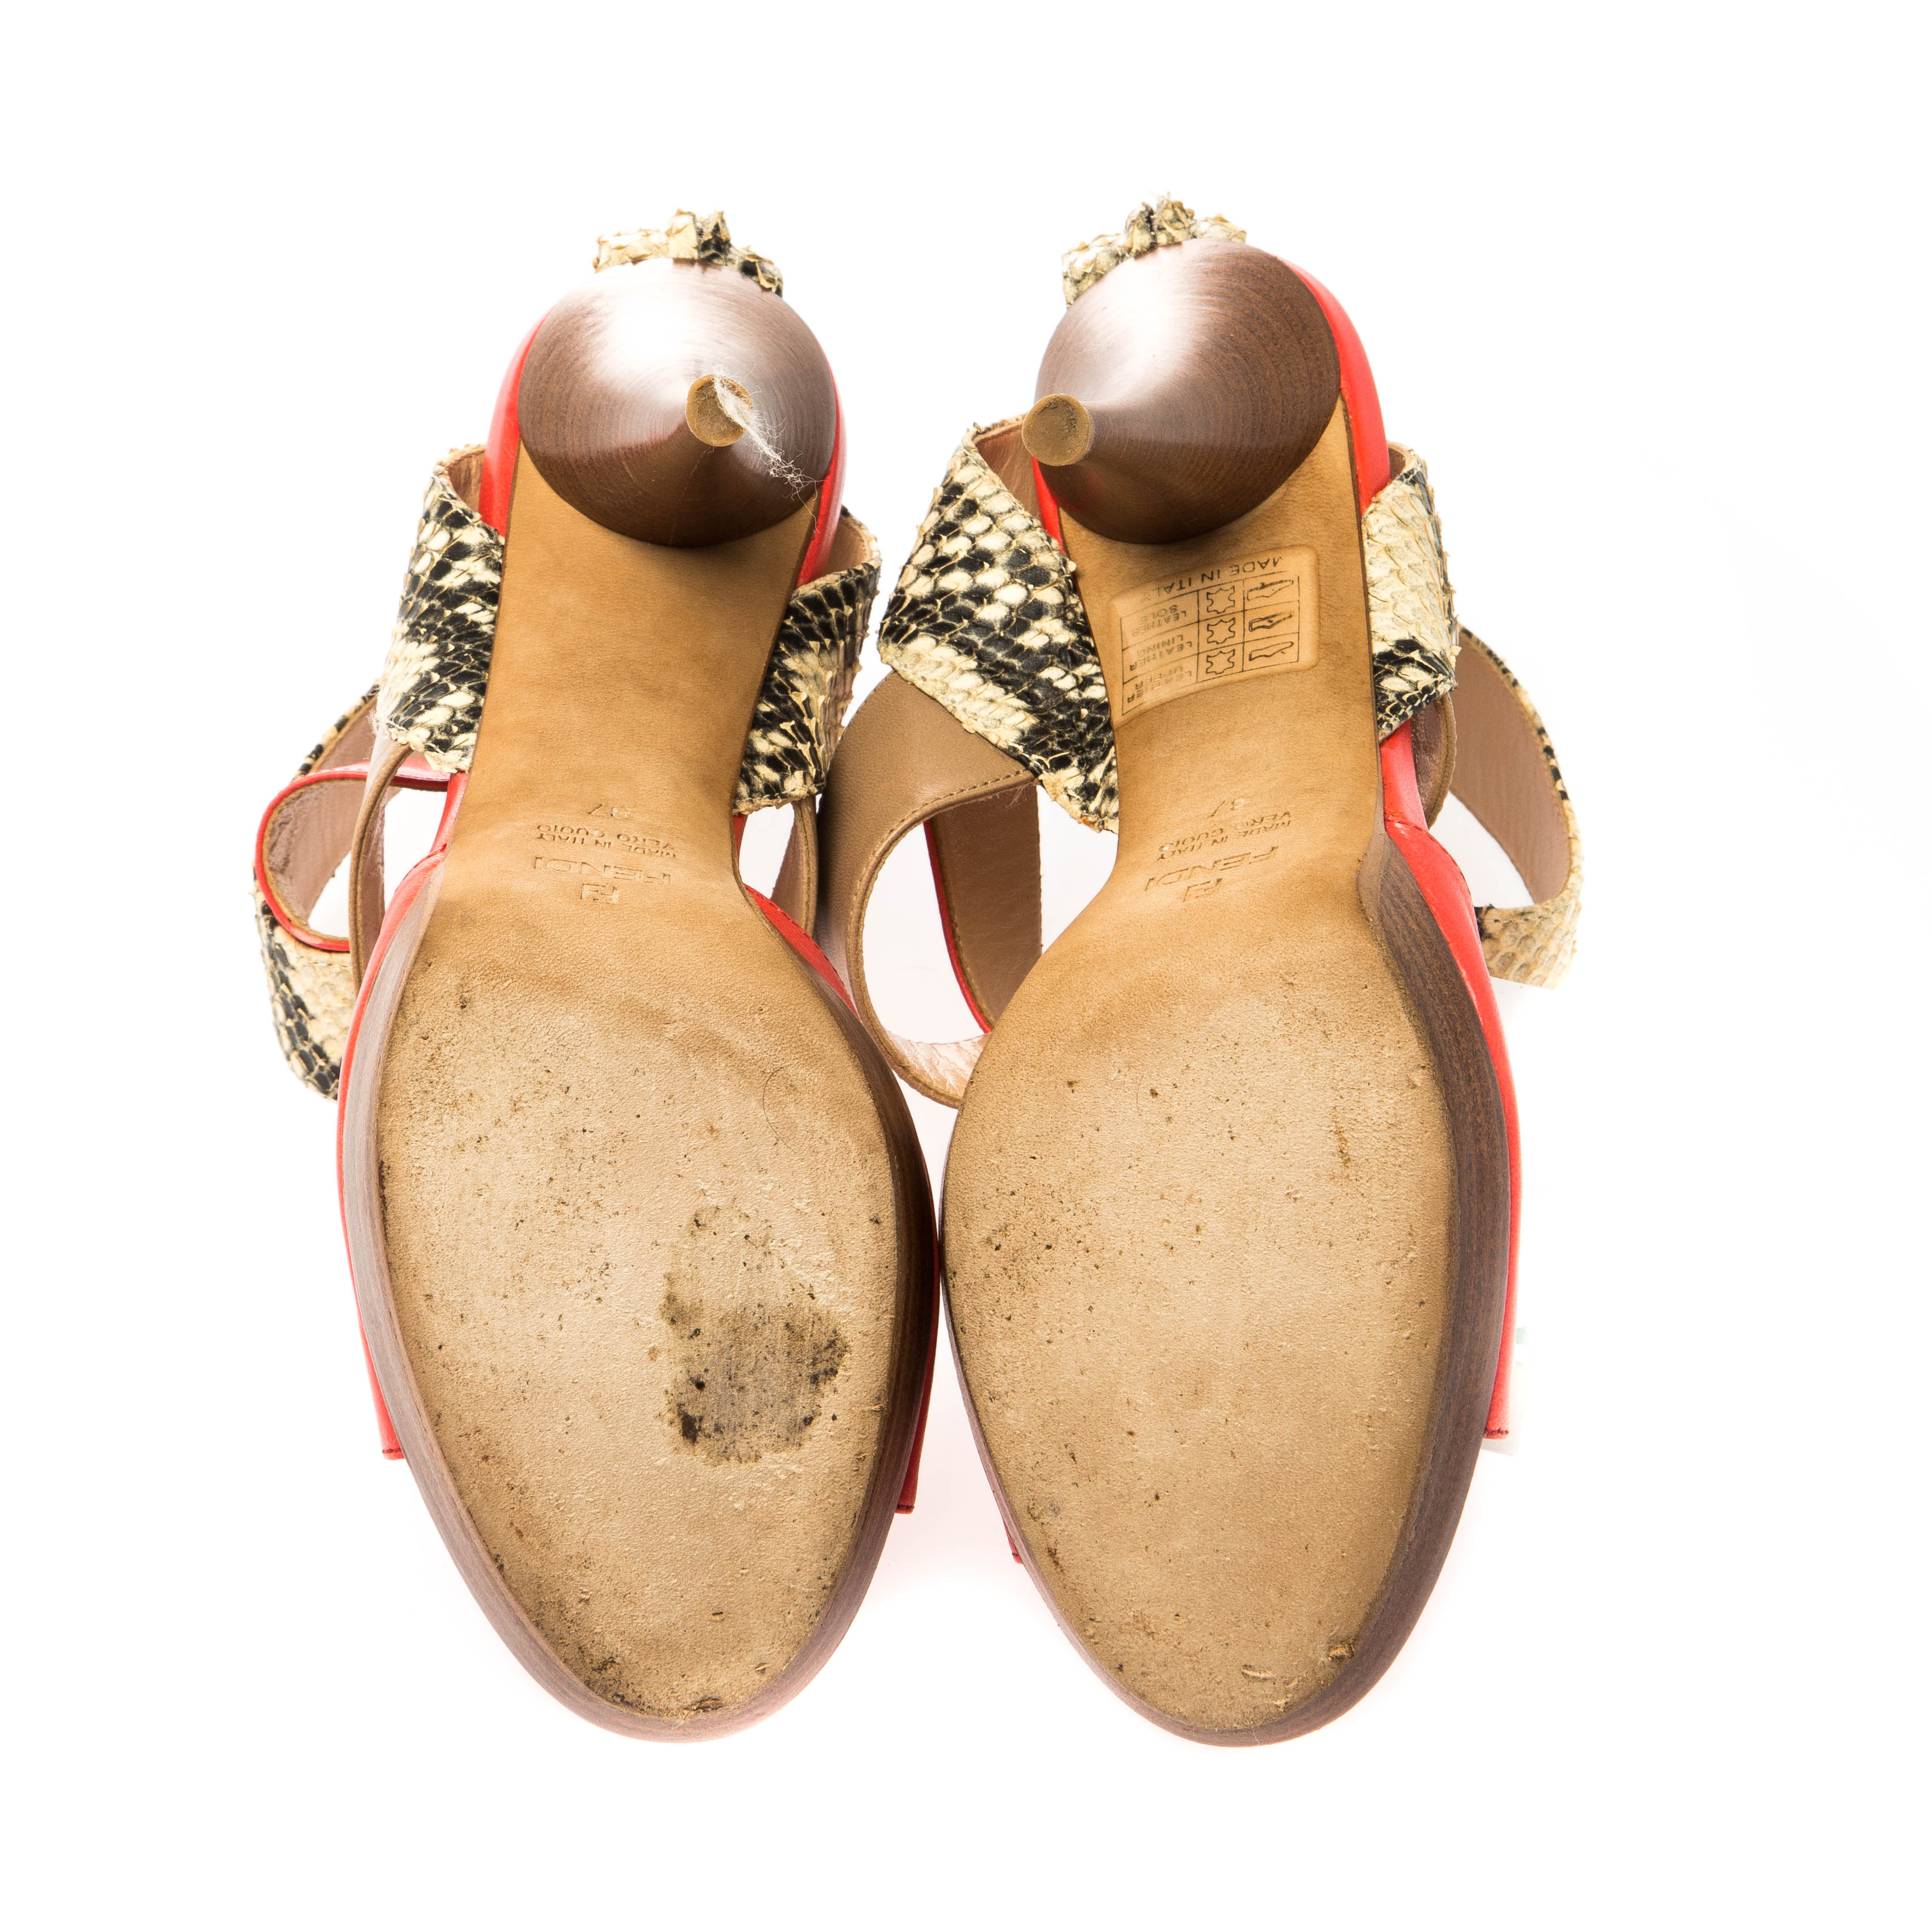 Fendi Tricolor Leather And Python Leather Ankle Strap Platform Sandals Size 37